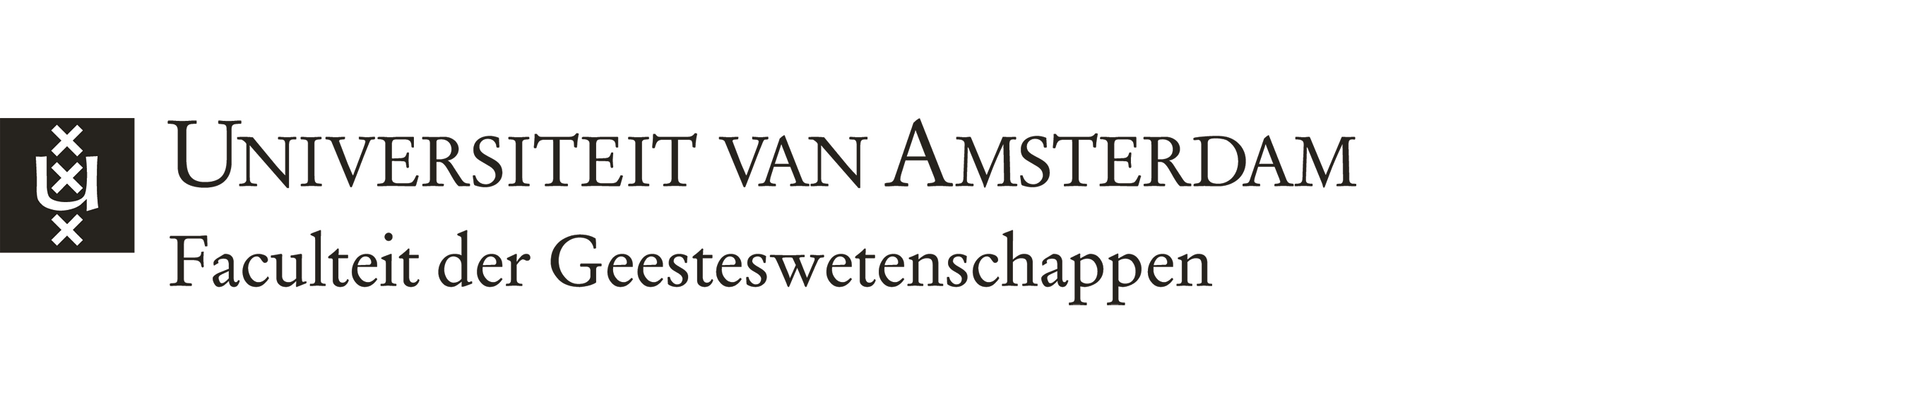 Seventeenth-Century Amsterdam as a Creative City